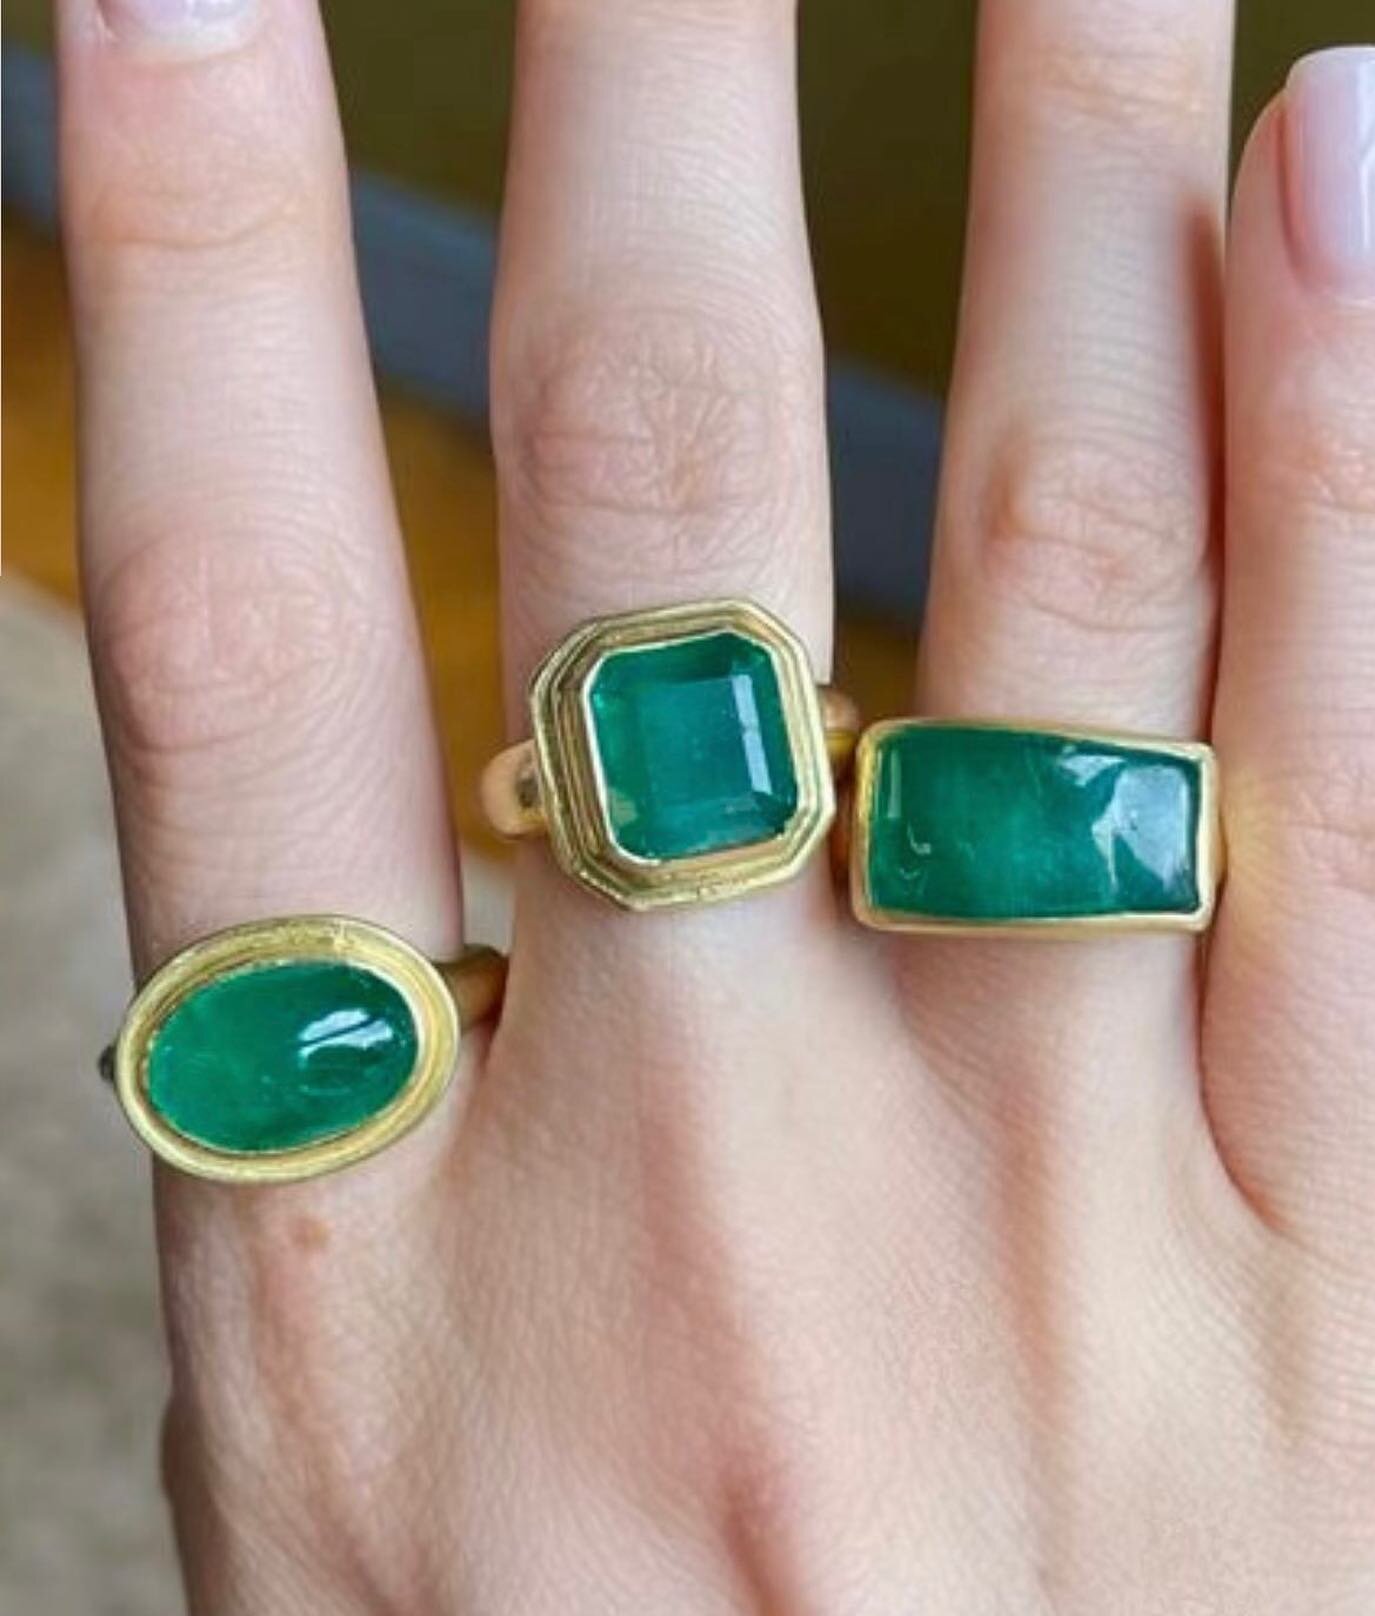 emeralds⁣
⁣
#emerald #emeraldring #finejewellery #finejewelry #jewelryaddict #jewelleryaddict #jewelrylover #jewellerylover #modernheritage #futureheirlooms #handmadejewellery #jewellerydesigner #ethicaljewellery